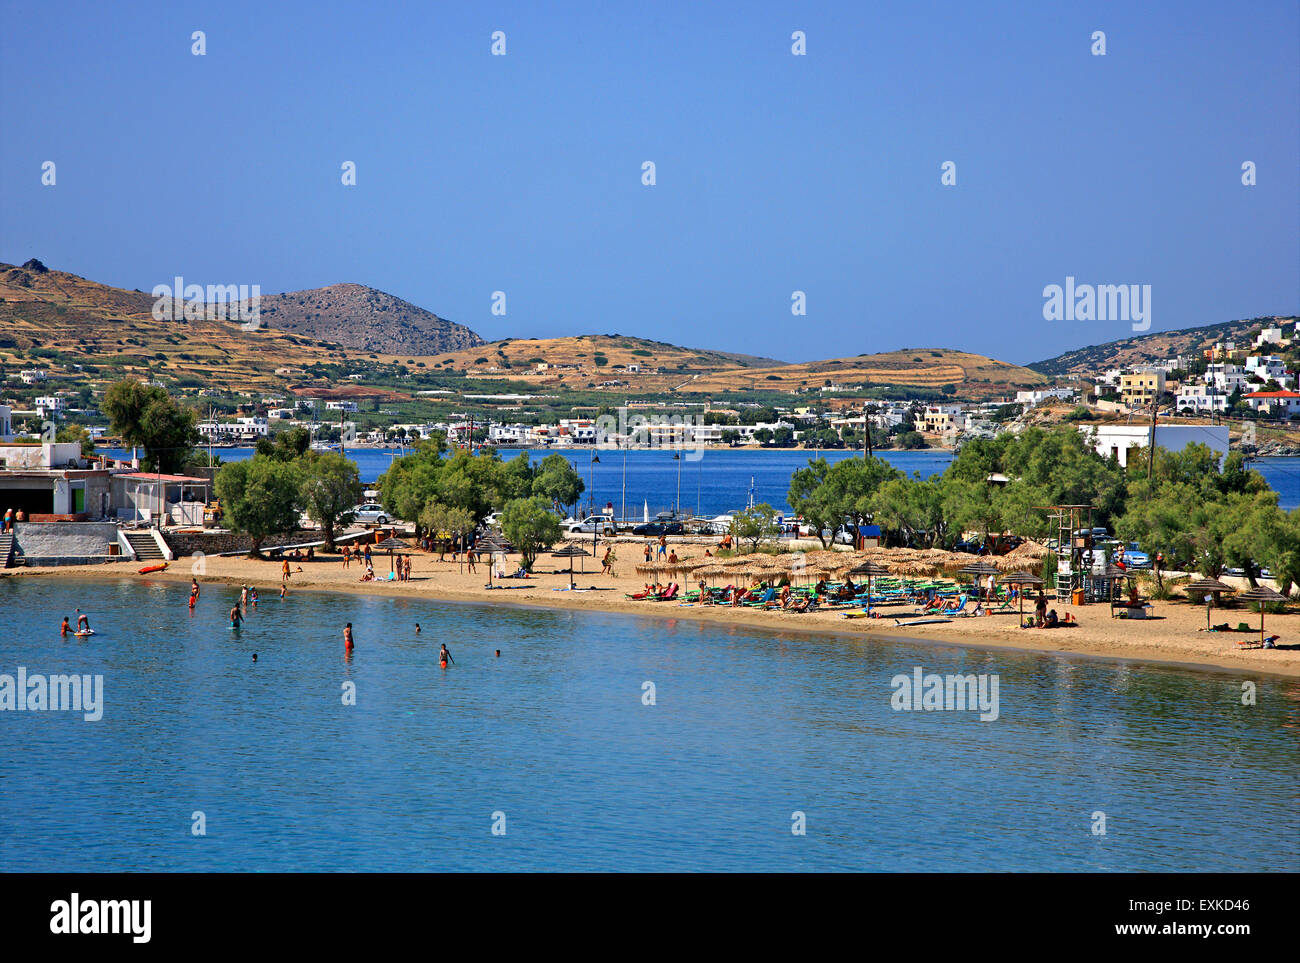 Agathopes Strand, in der Nähe von Poseidonia ('Dellagrazia') Dorf, Syros Insel, Kykladen, Ägäis, Griechenland. Stockfoto